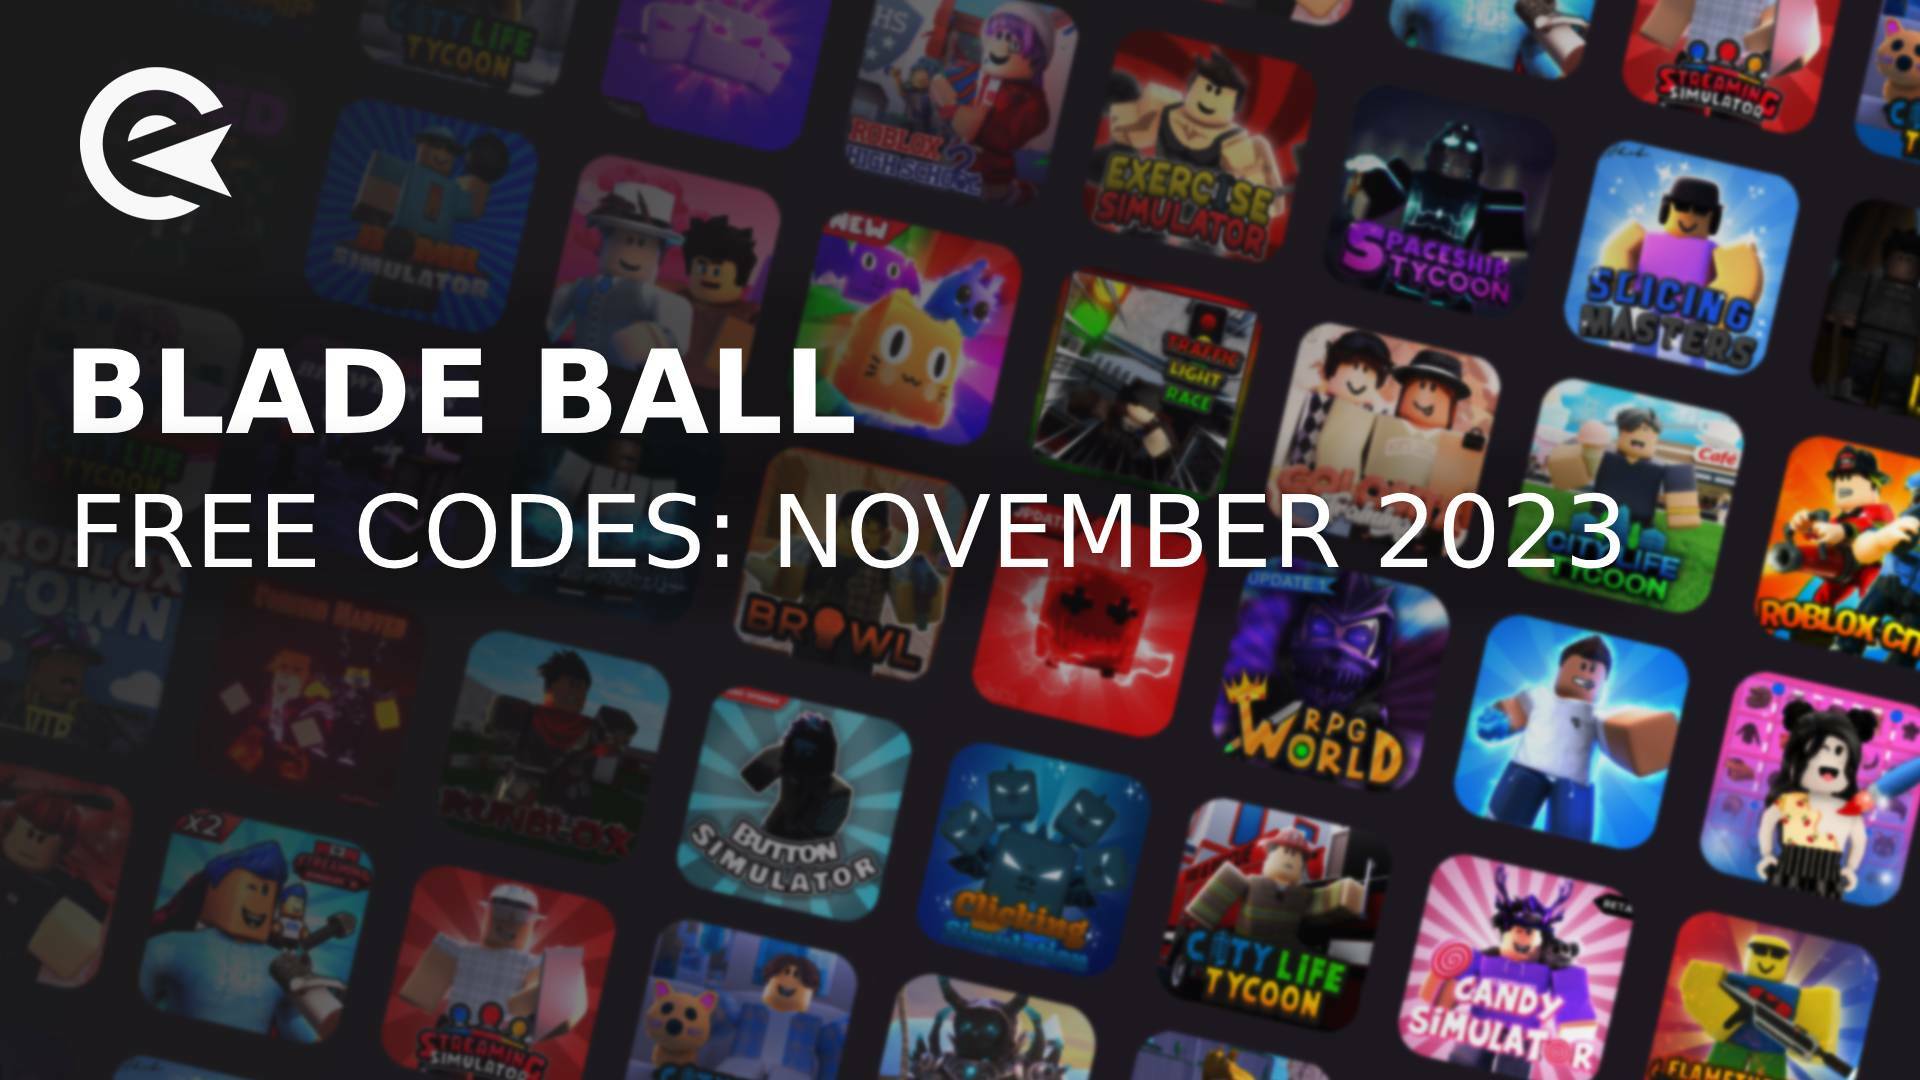 Blade Ball Codes (December 2023)